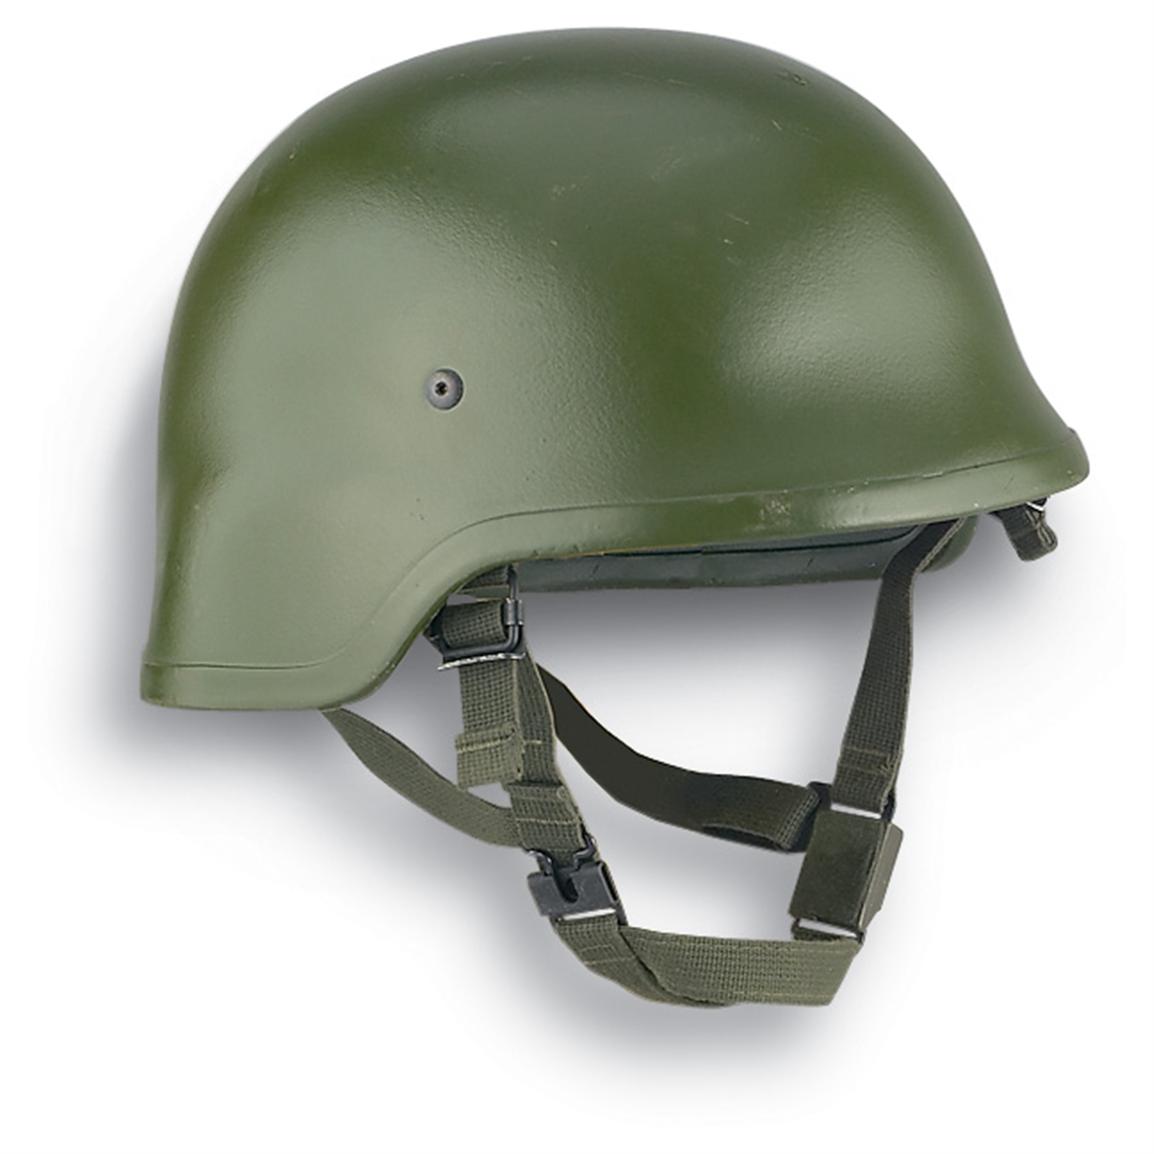 New German Military Helmet with Kevlar® - 130990, Helmets & Accessories at Sportsman's Guide